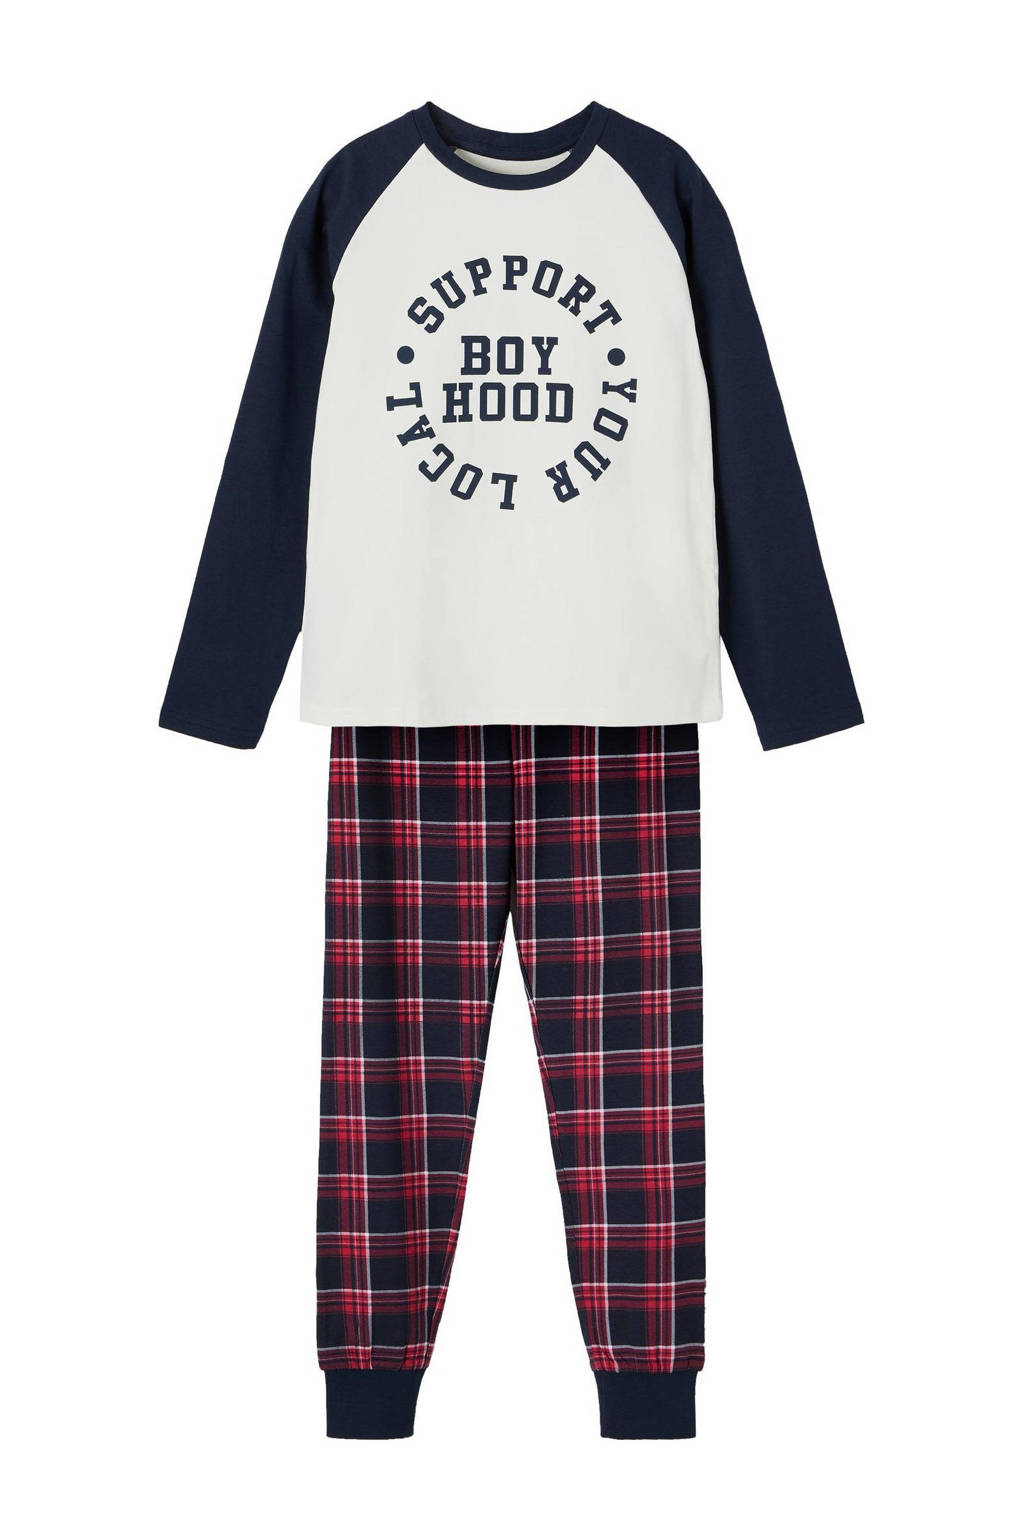 NAME IT KIDS   geruite pyjama NKMNIGHTSET wit/blauw/rood, Wit/blauw/rood